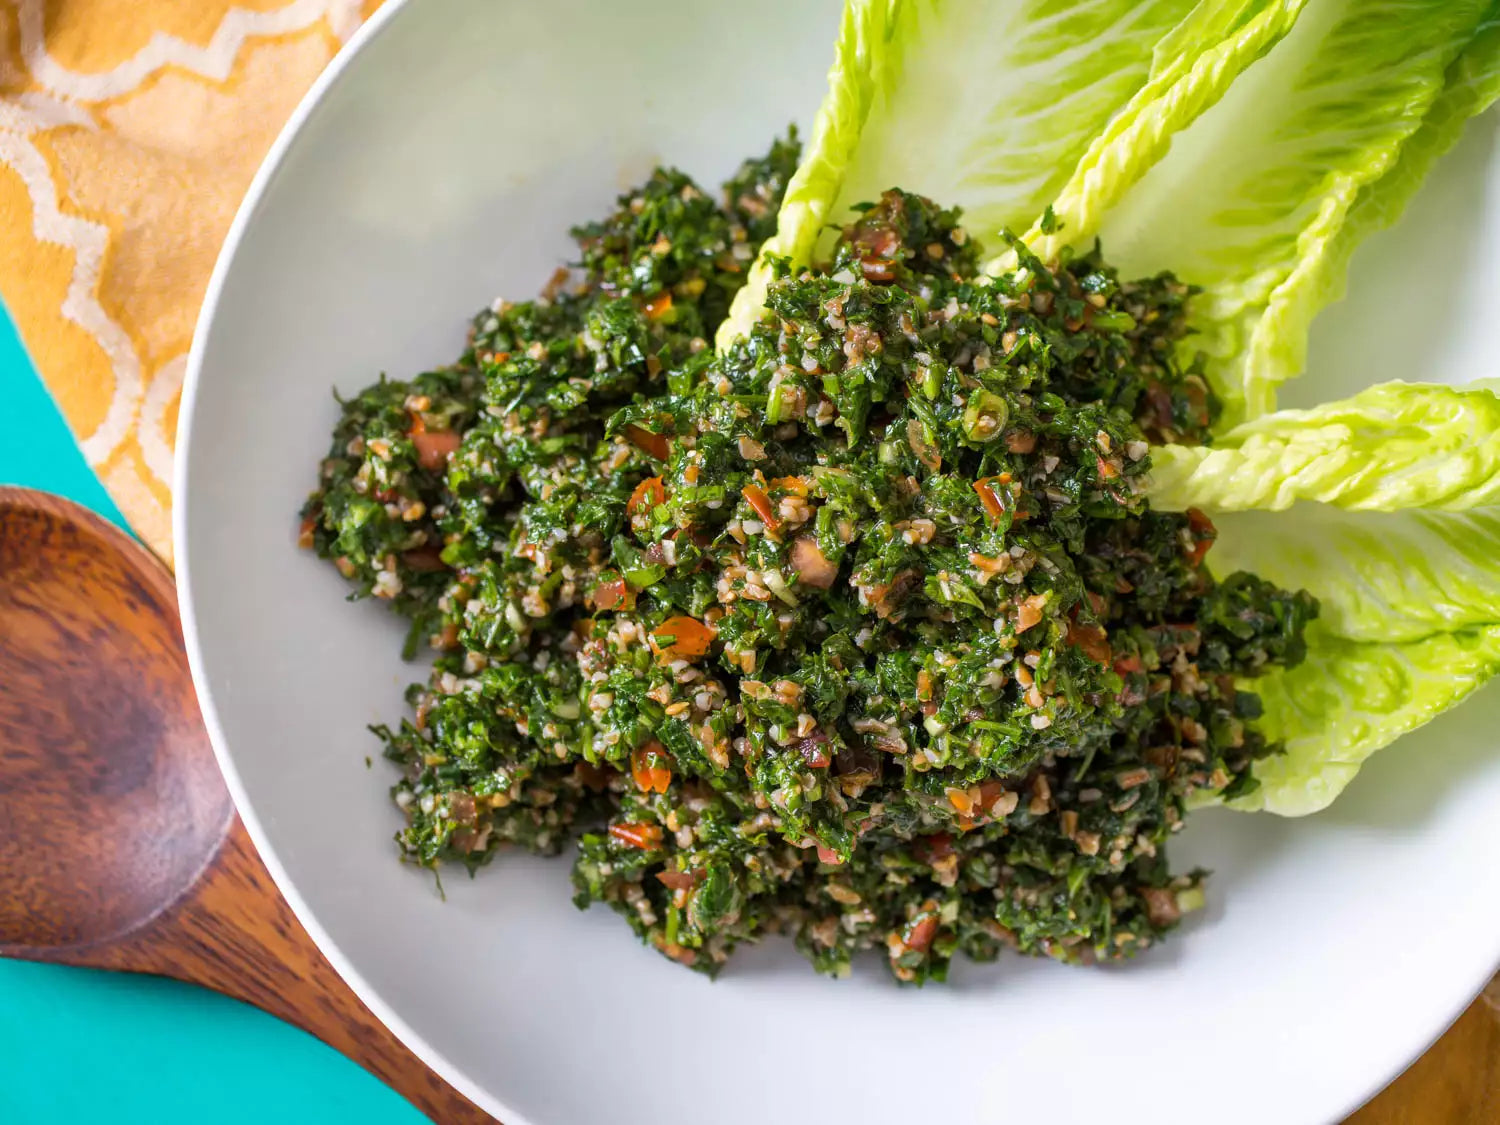 Edible Garden's tabbouleh salad